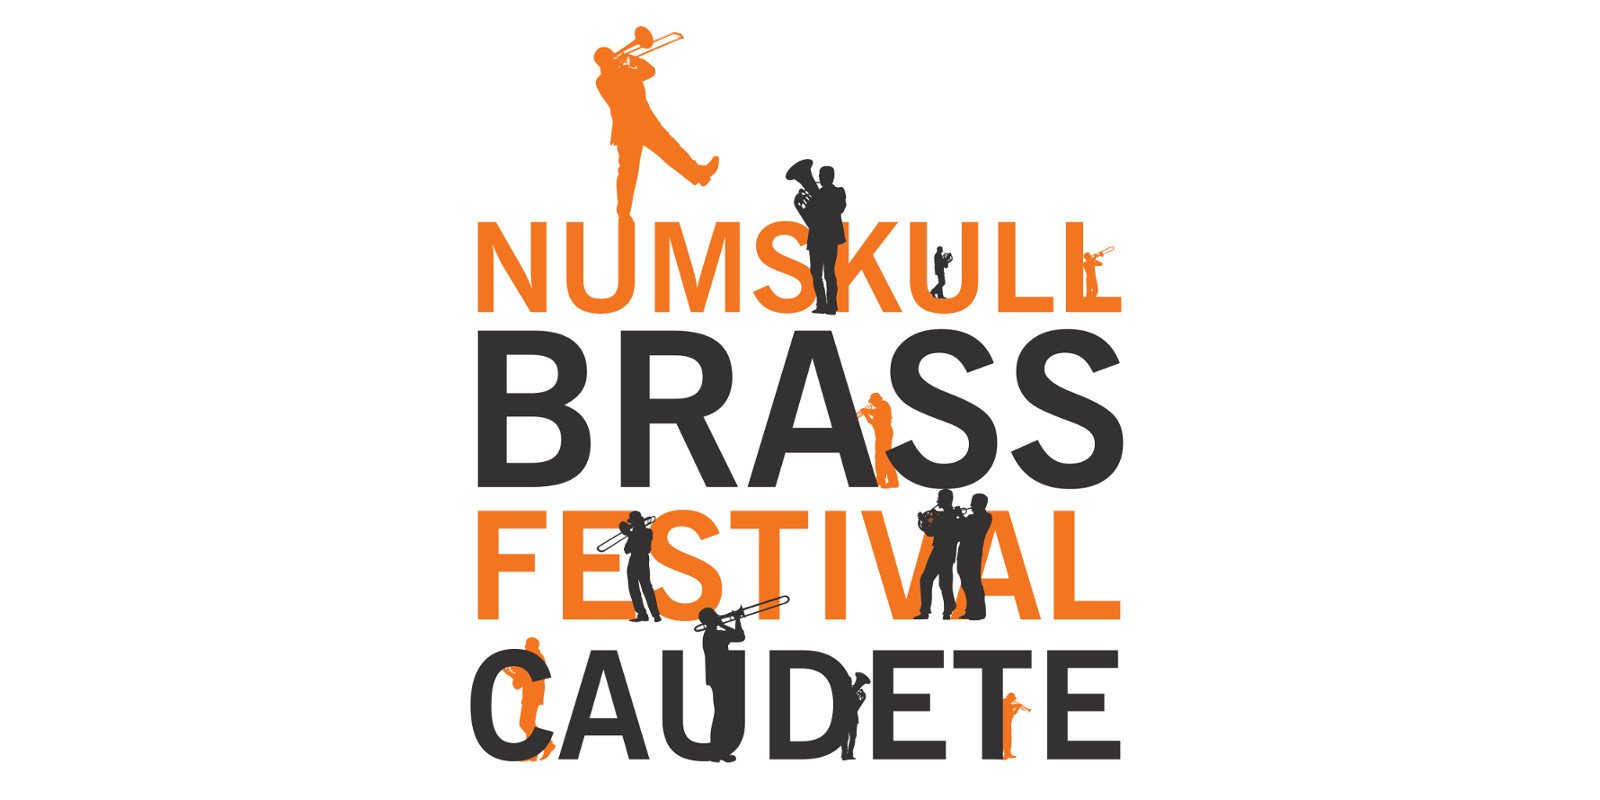 Numskull Brass Festival